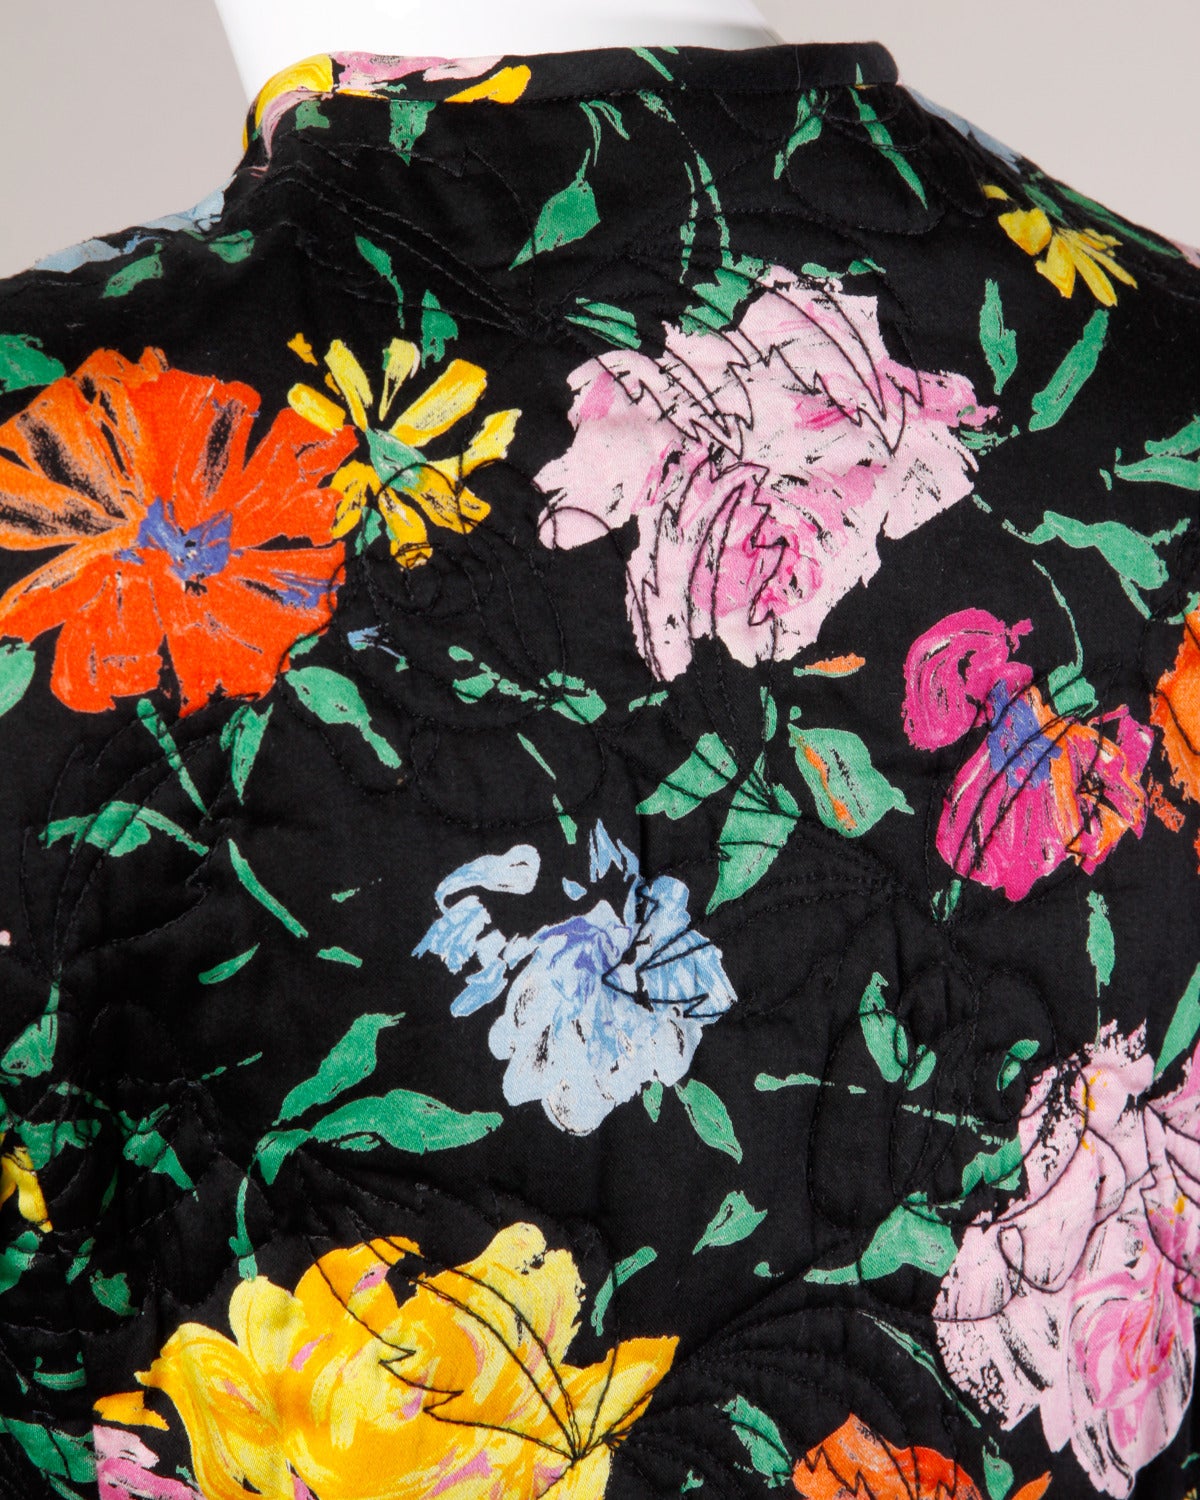 Emanuel Ungaro Vintage Floral Print Quilted Jacket + Skirt Suit Ensemble 1